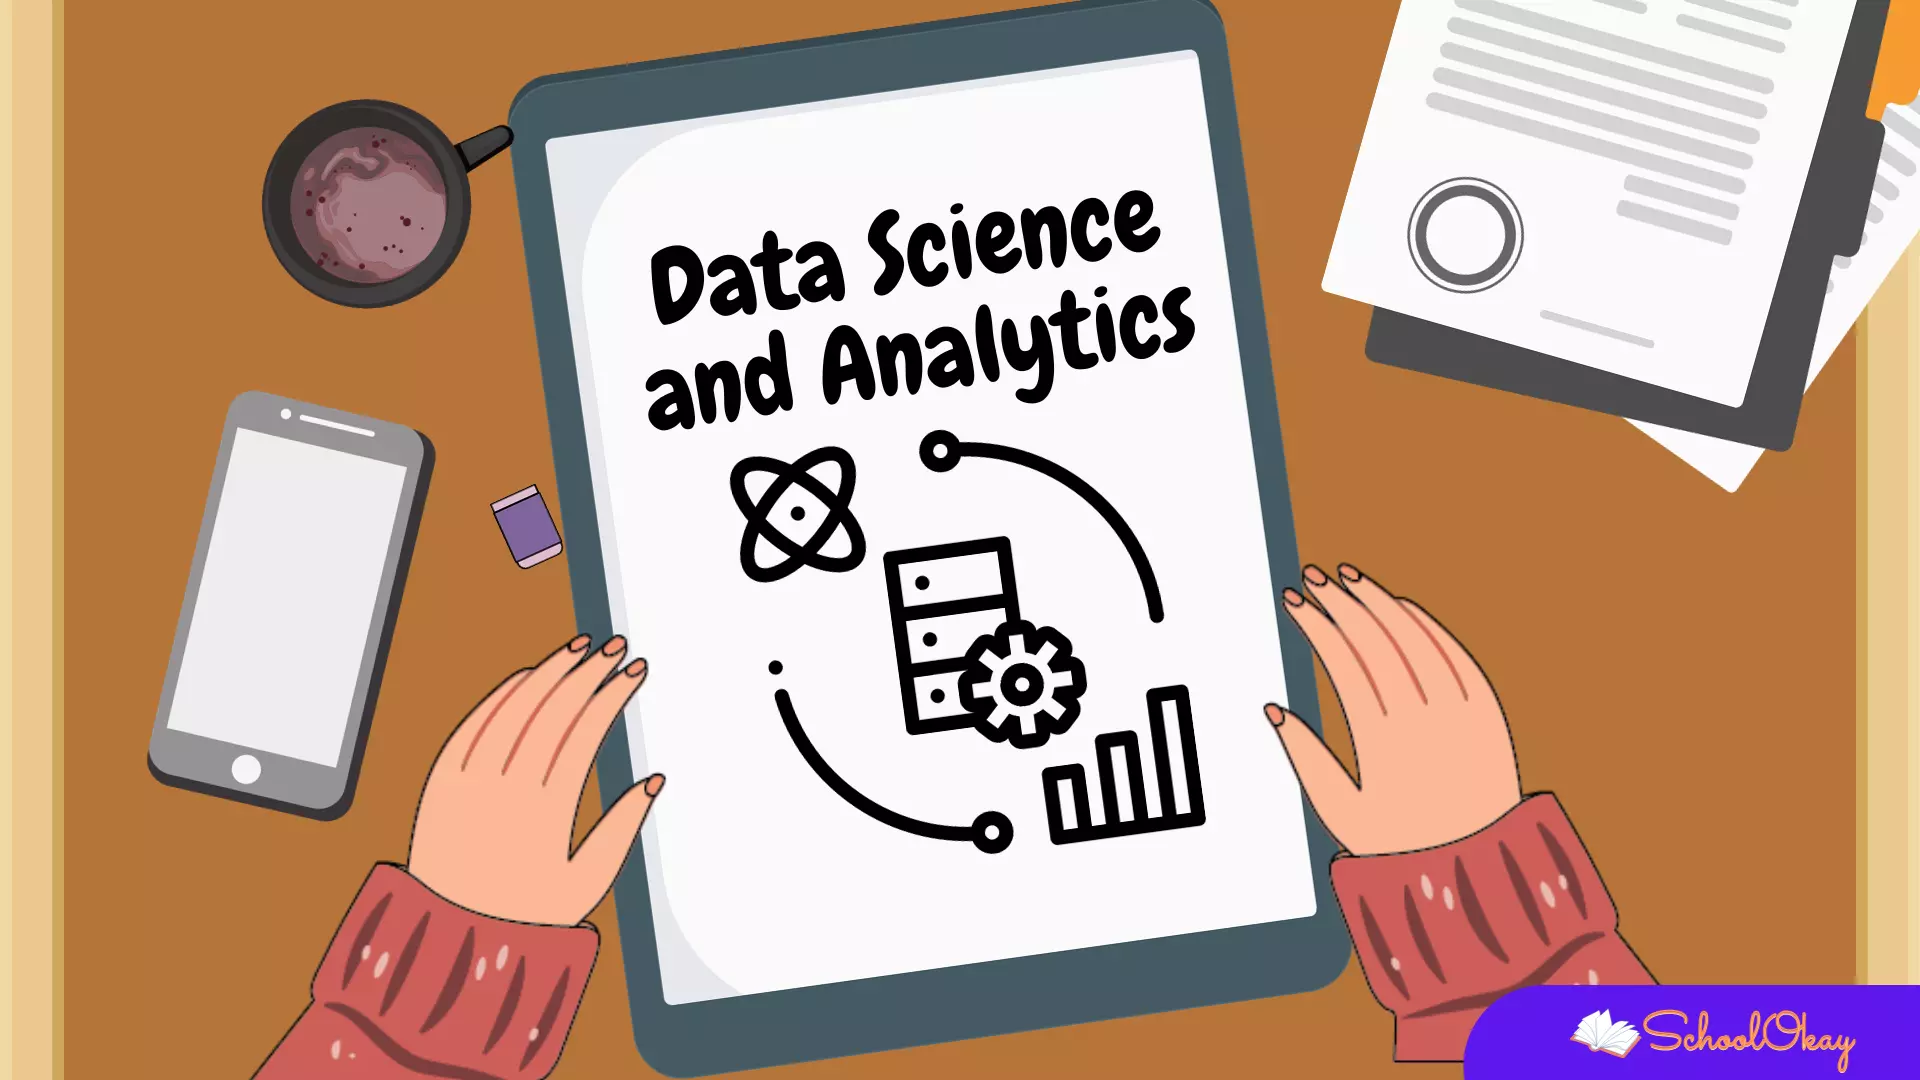 Data Science and Analytics